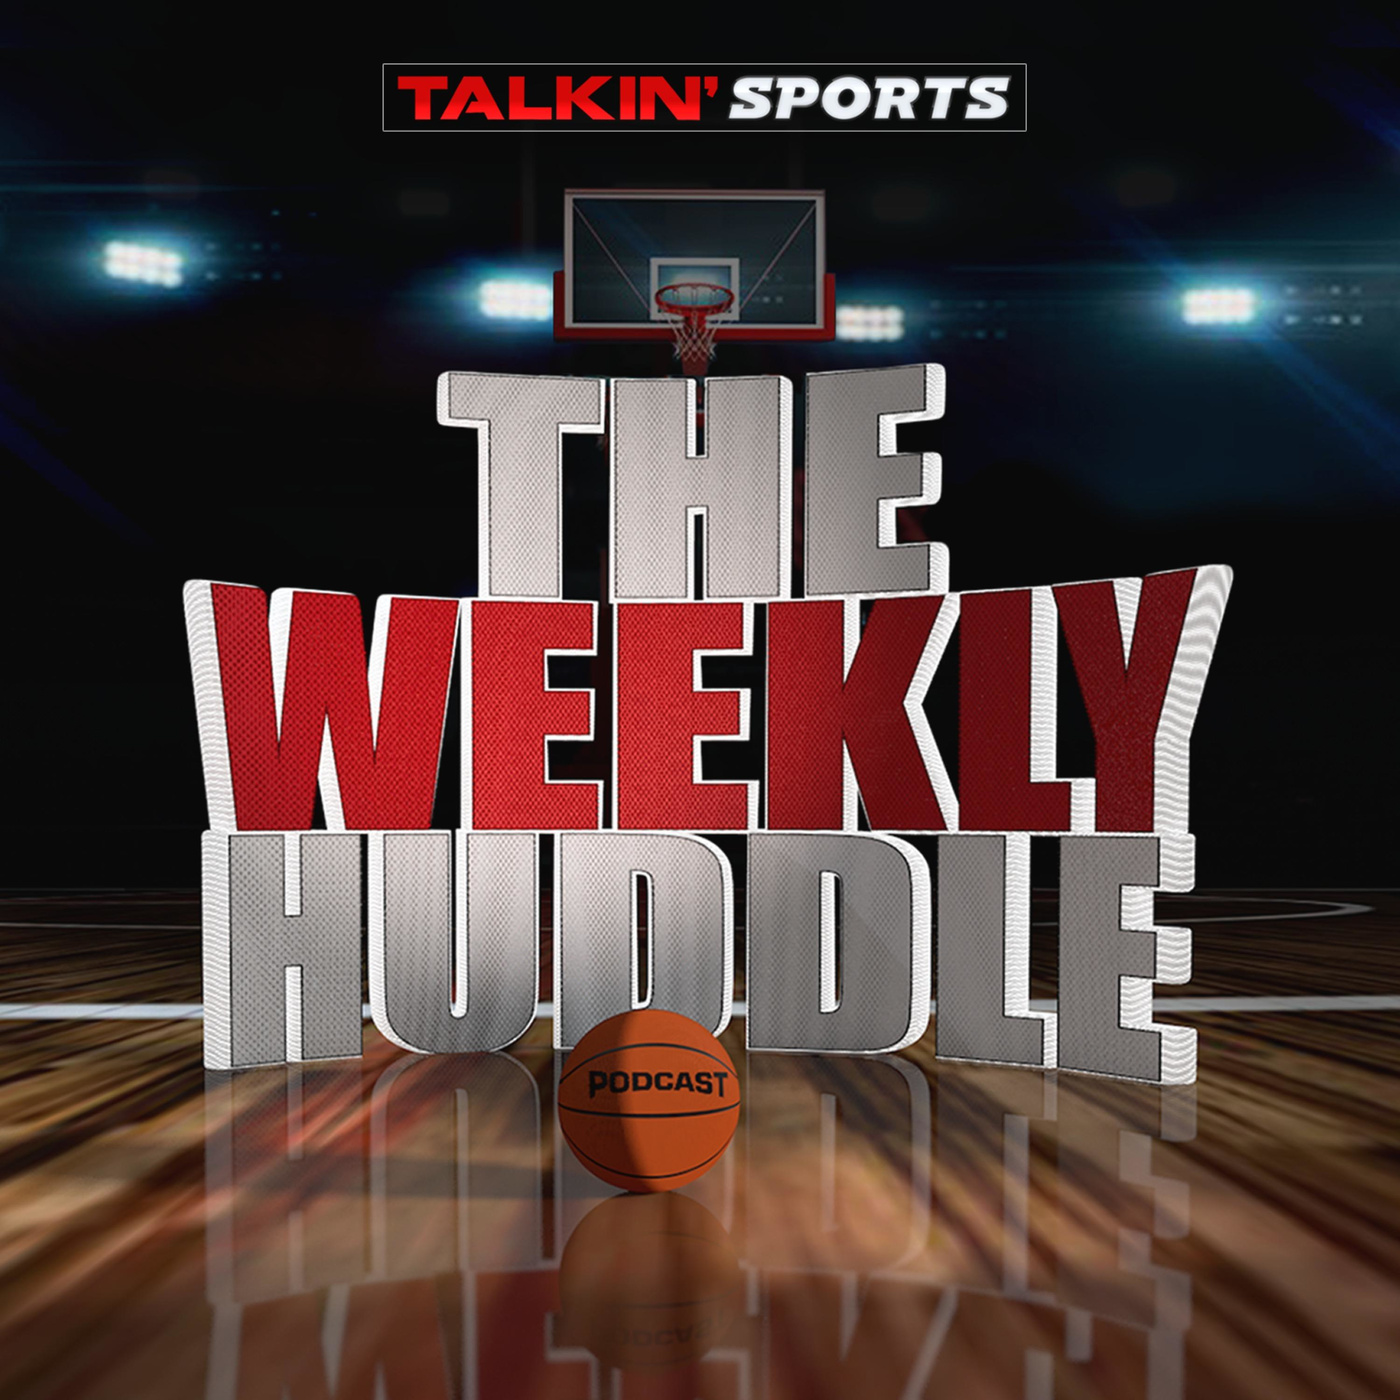 Talkin' Sports - The Weekly Huddle